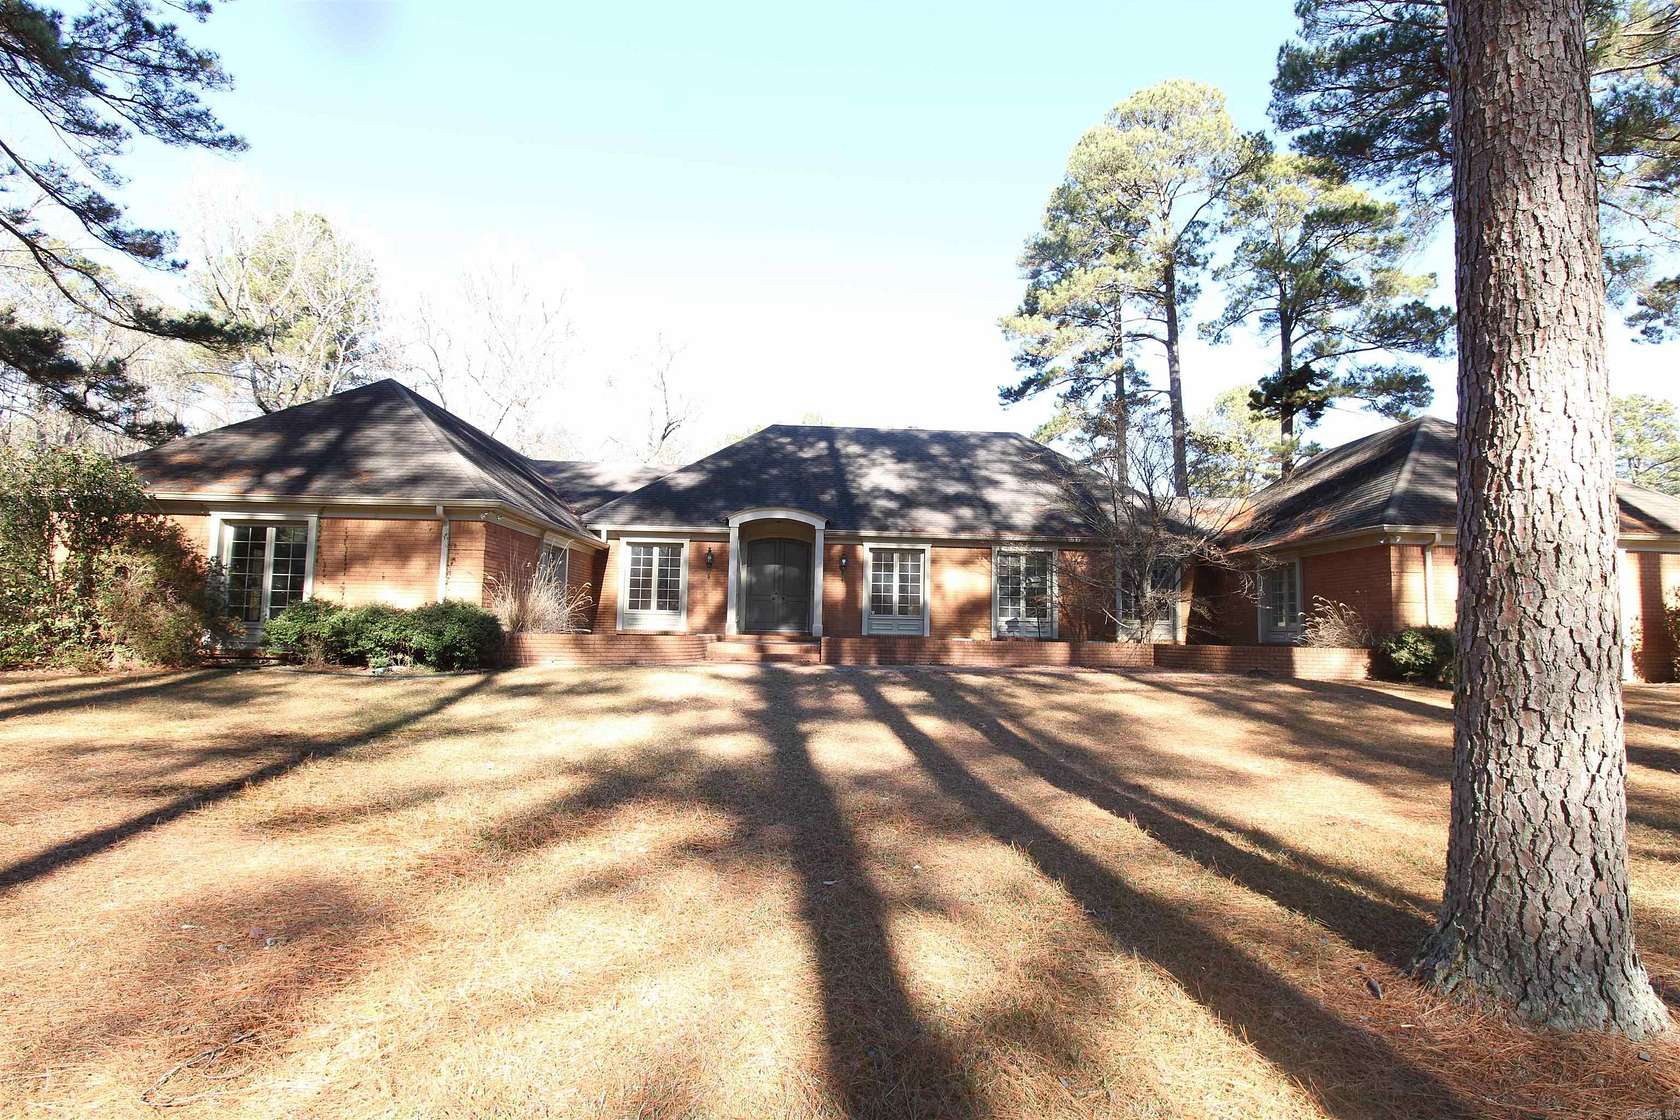 5 Acres of Residential Land with Home for Sale in Arkadelphia, Arkansas